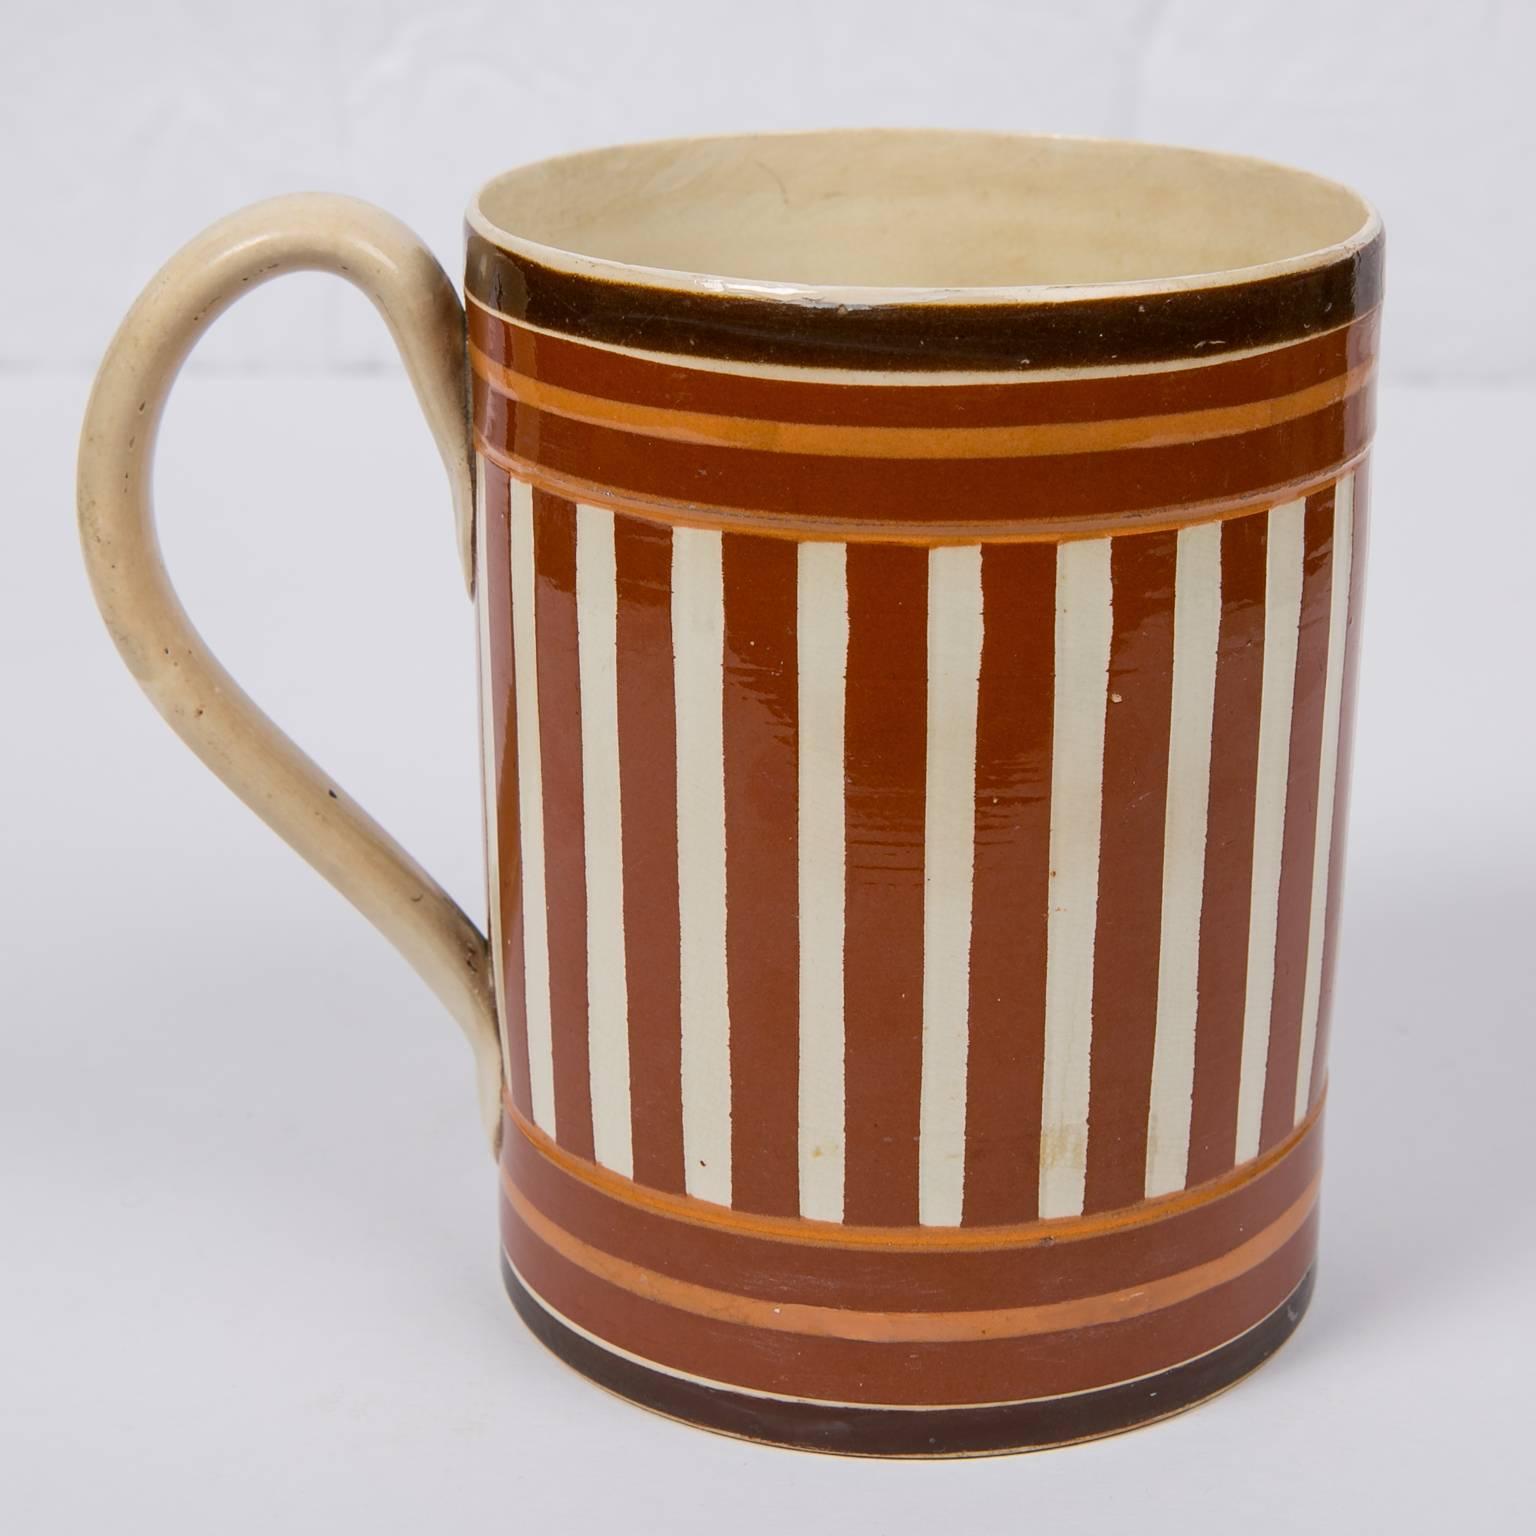 Folk Art Antique Creamware Mochaware Mug with Stripes